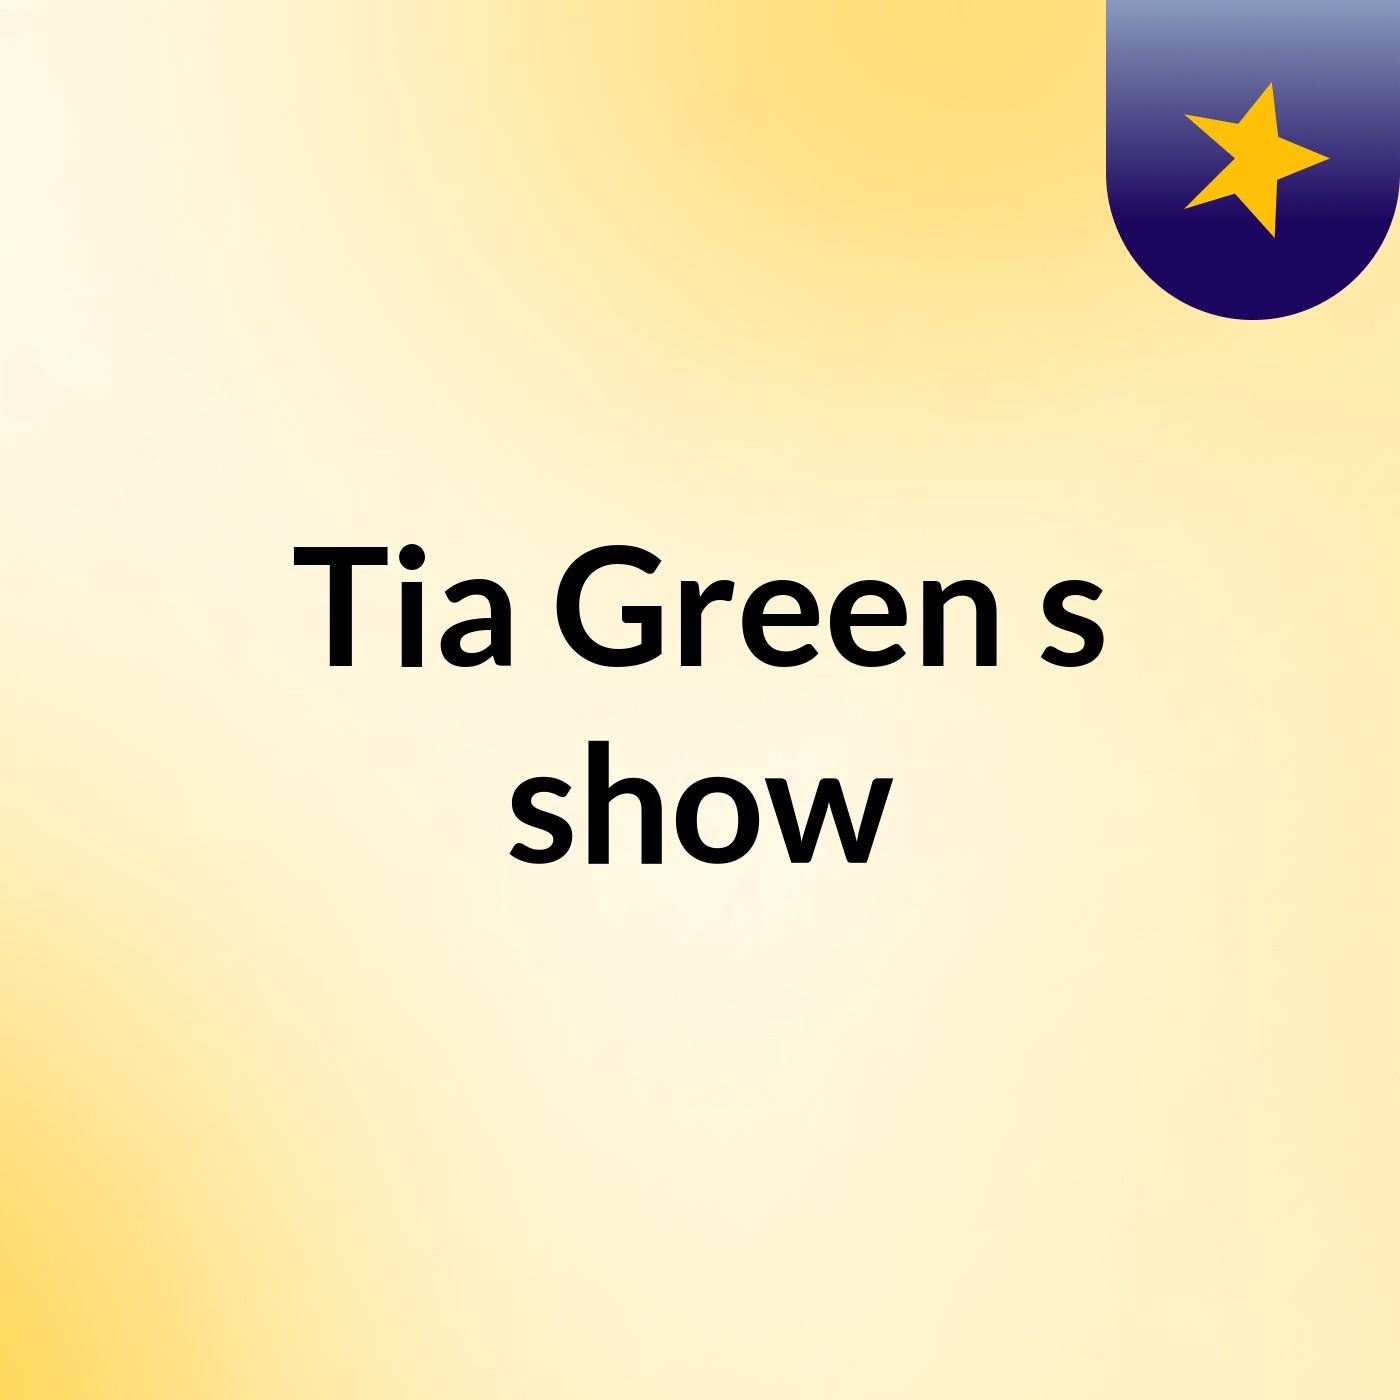 Tia Green's show